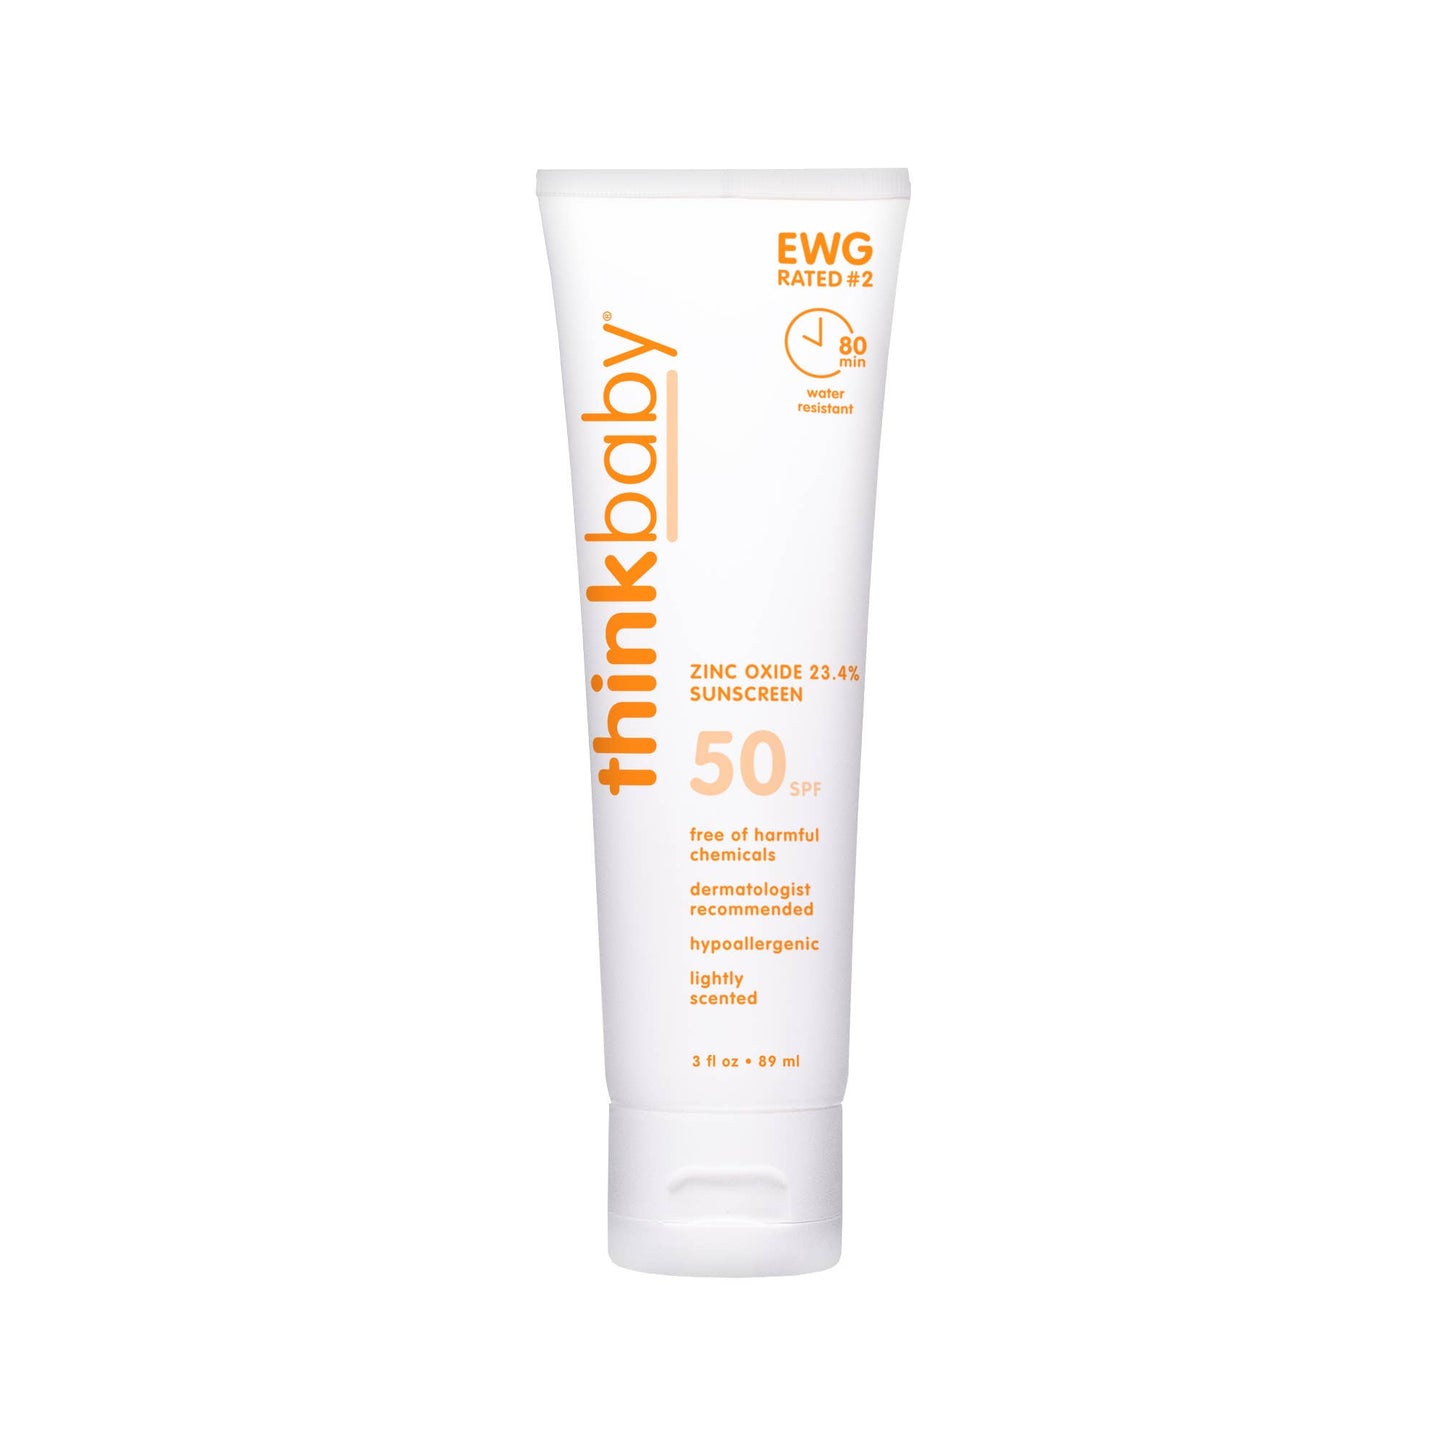 Thinkbaby Safe Sunscreen SPF 50+ (6oz) - Family Size